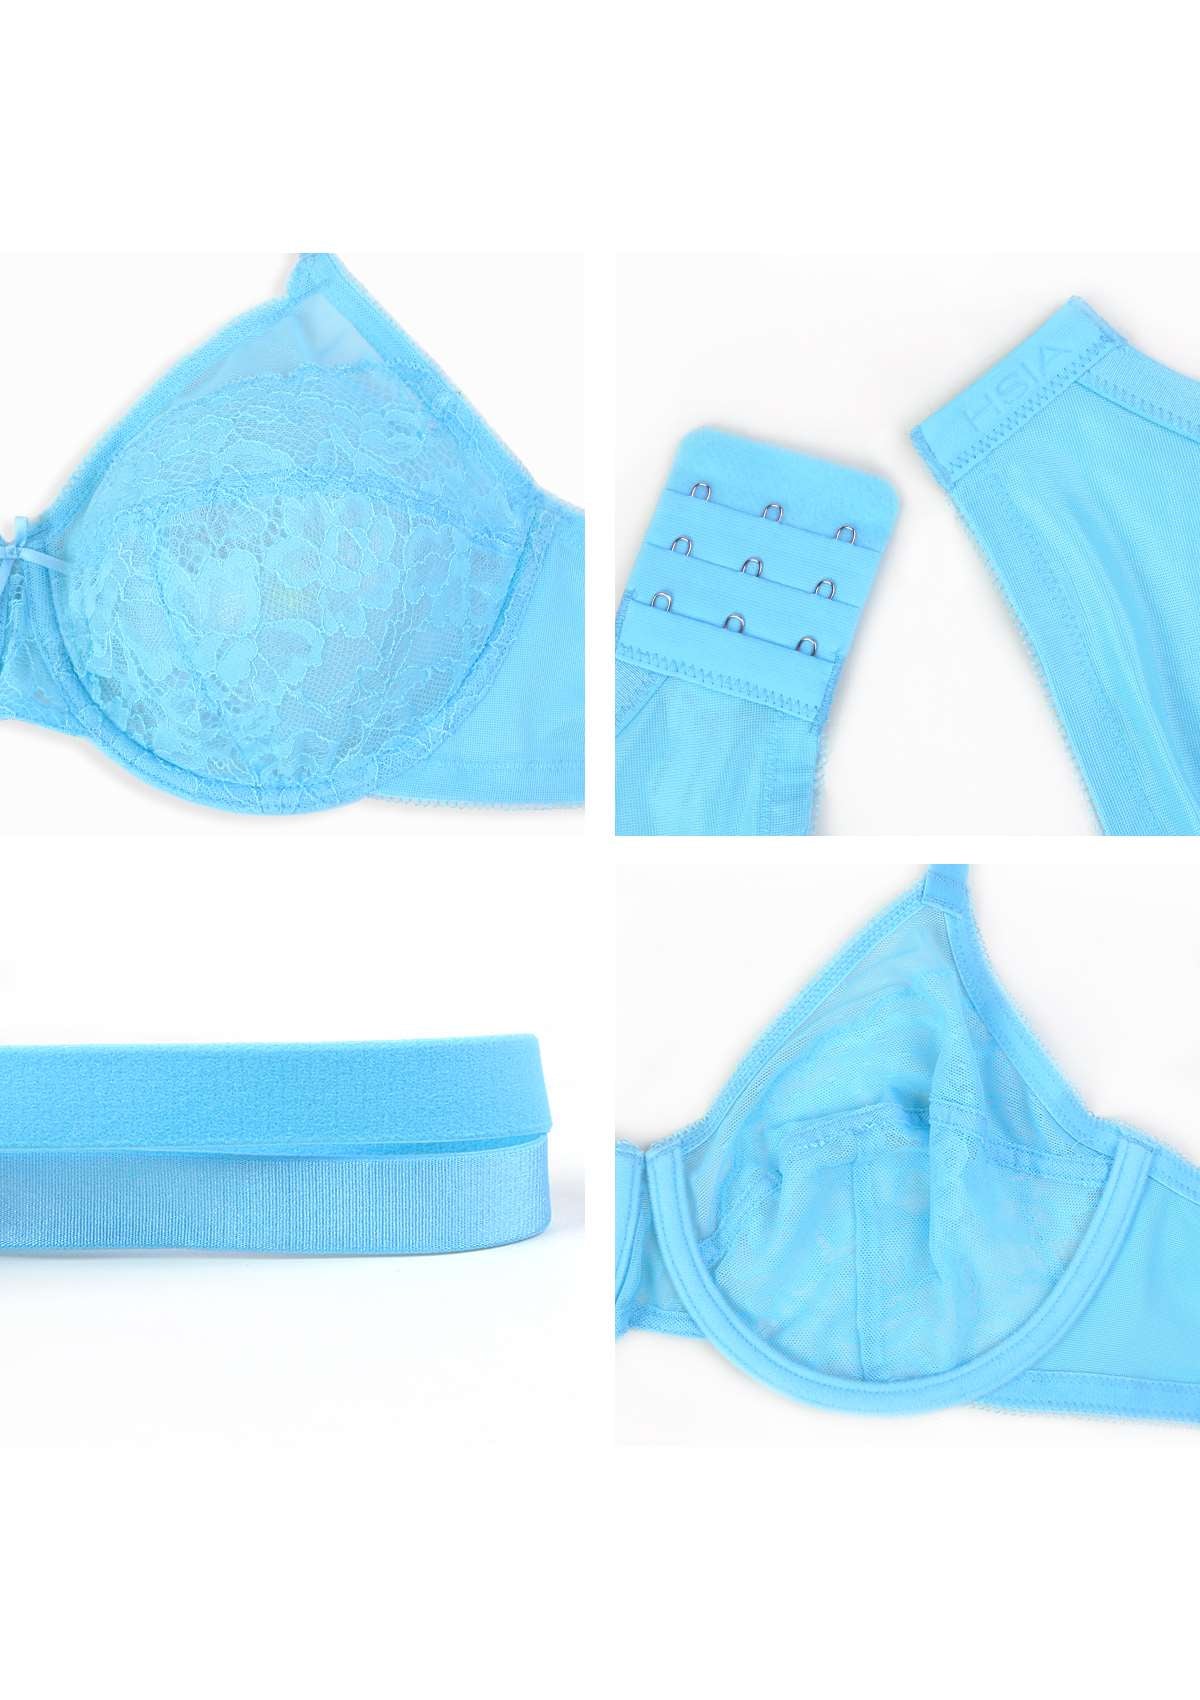 HSIA Enchante Minimizer Lace Bra: Full Support For Heavy Breasts - Capri Blue / 42 / H